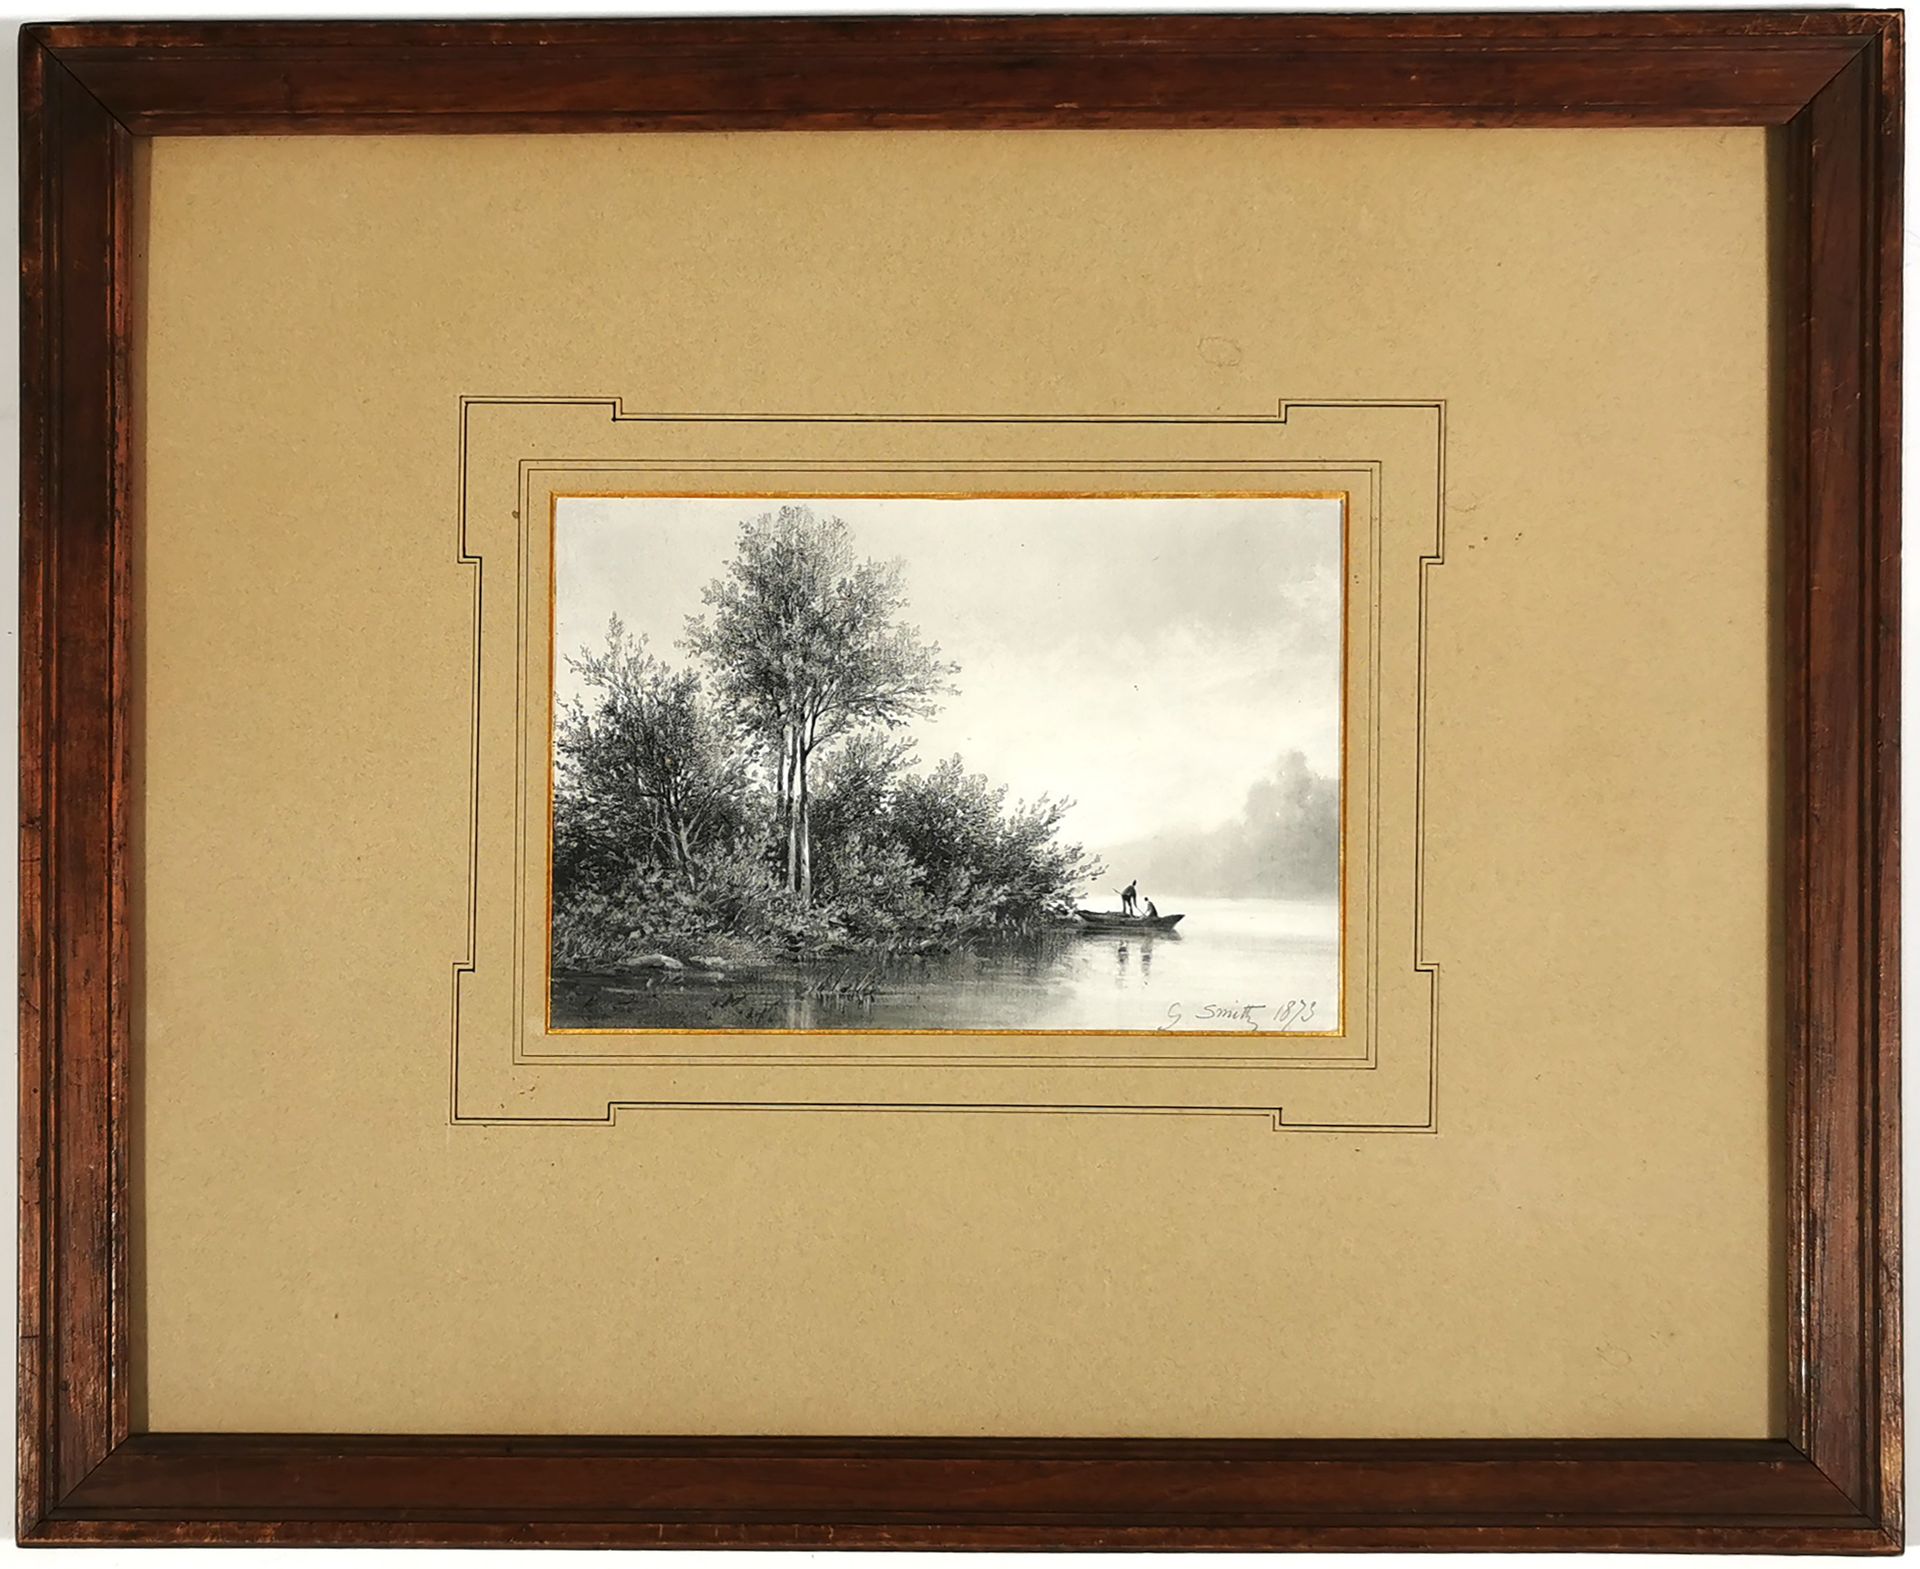 Null 乔治-史密斯(活跃于19世纪)

塞纳河的边缘，1873年

纸上碳和白粉笔，有签名和日期

11.8 x 17.5 cm 正在观看

有框